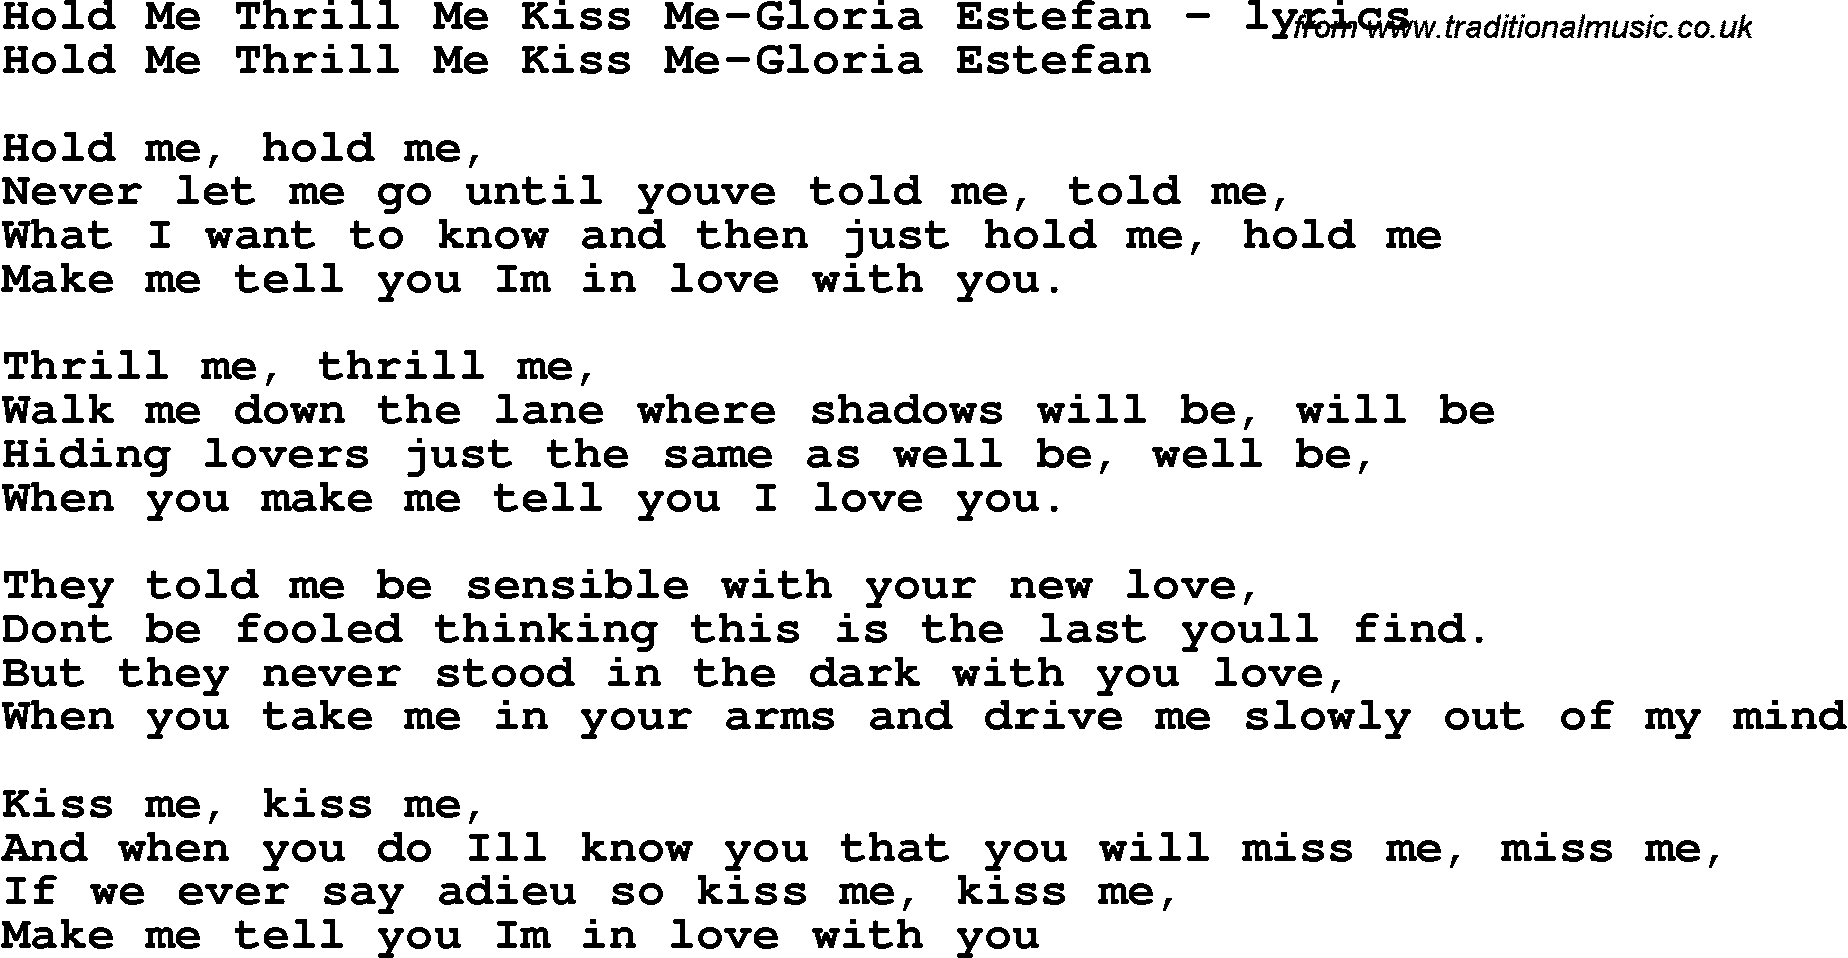 Love Song Lyrics for: Hold Me Thrill Me Kiss Me-Gloria Estefan